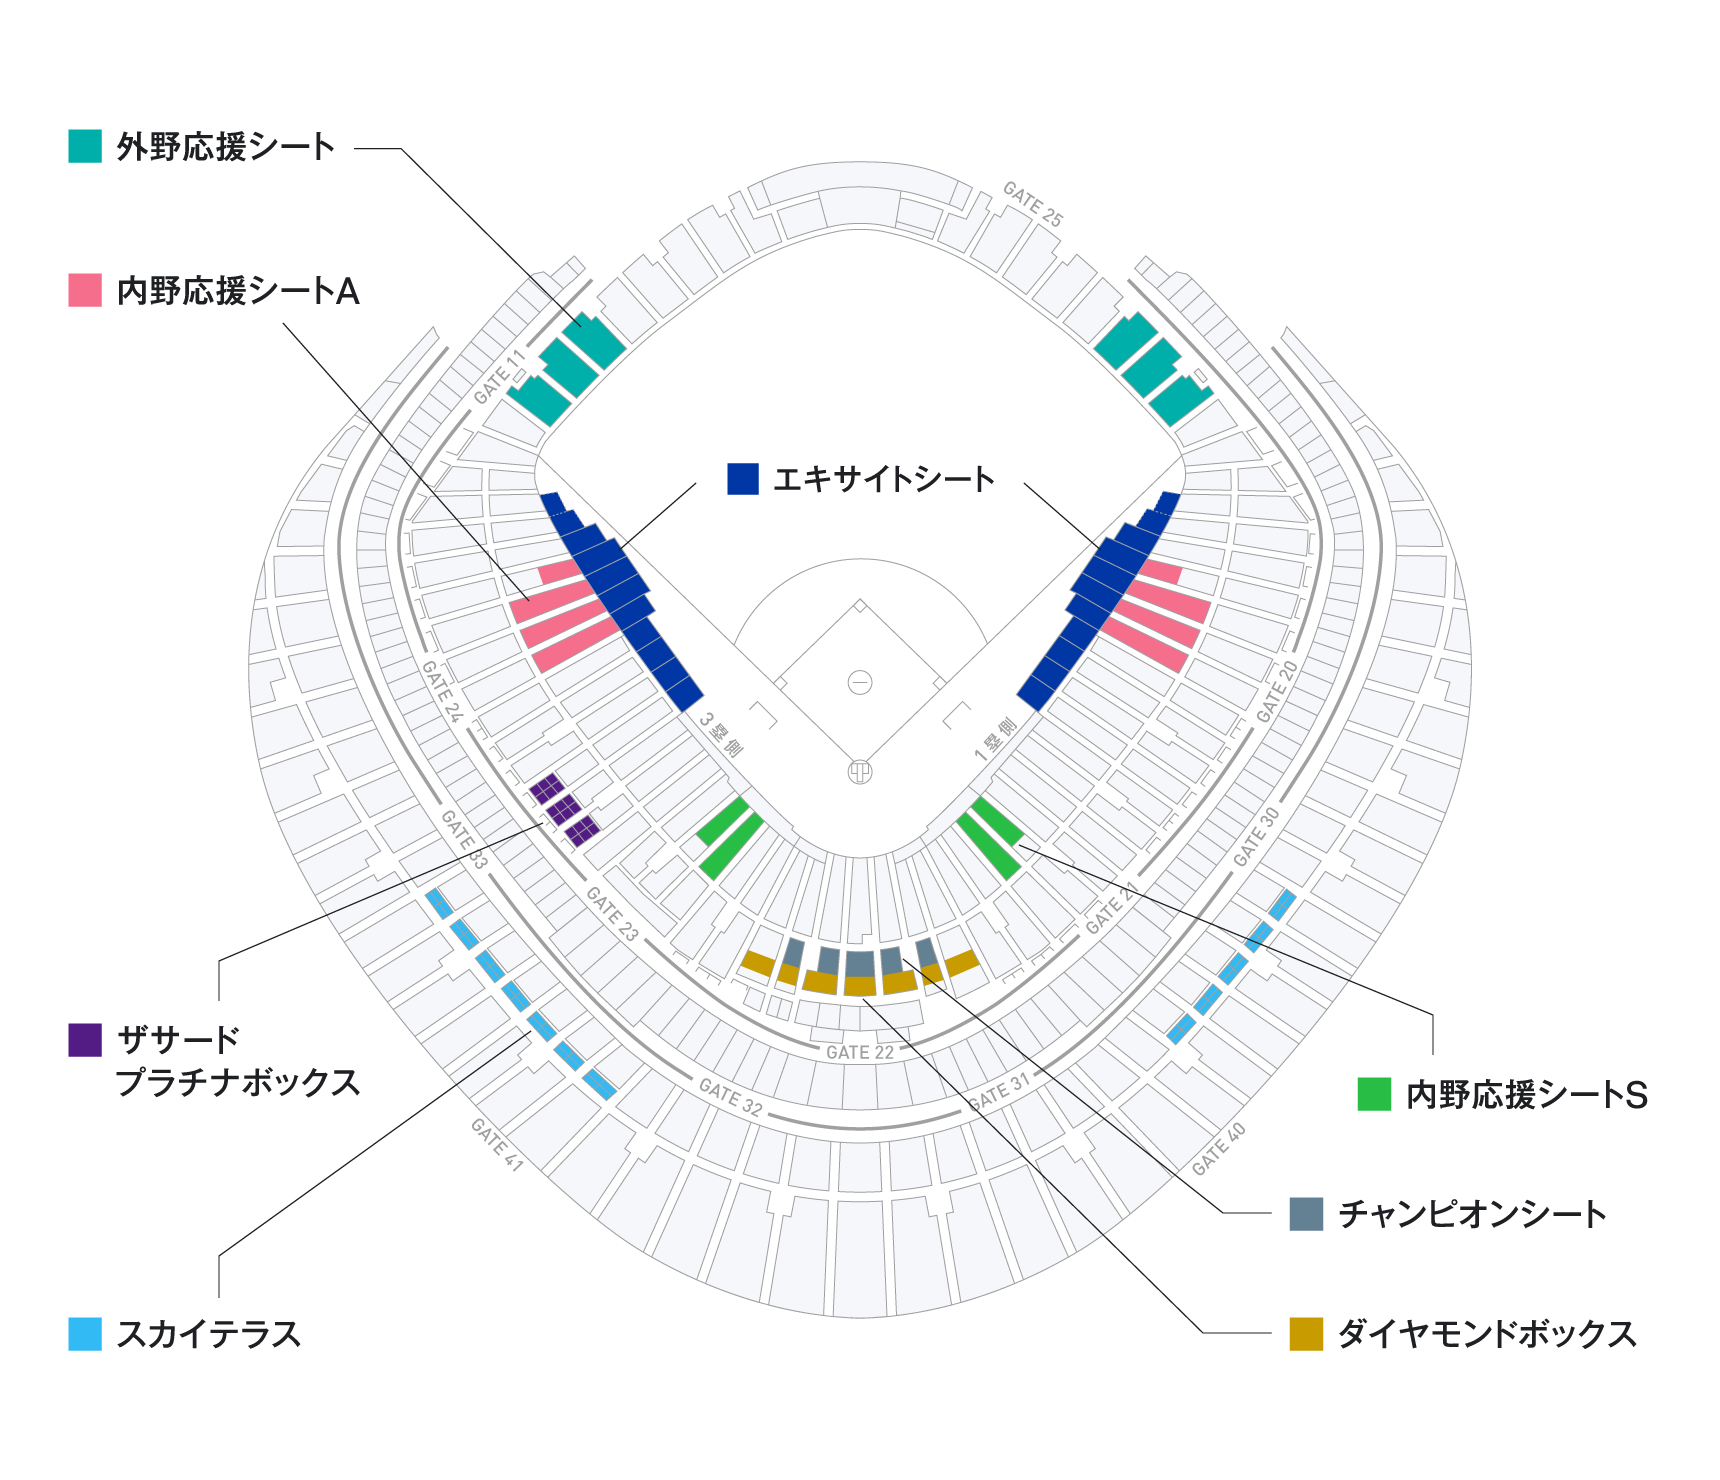 東京ドーム会場座席図